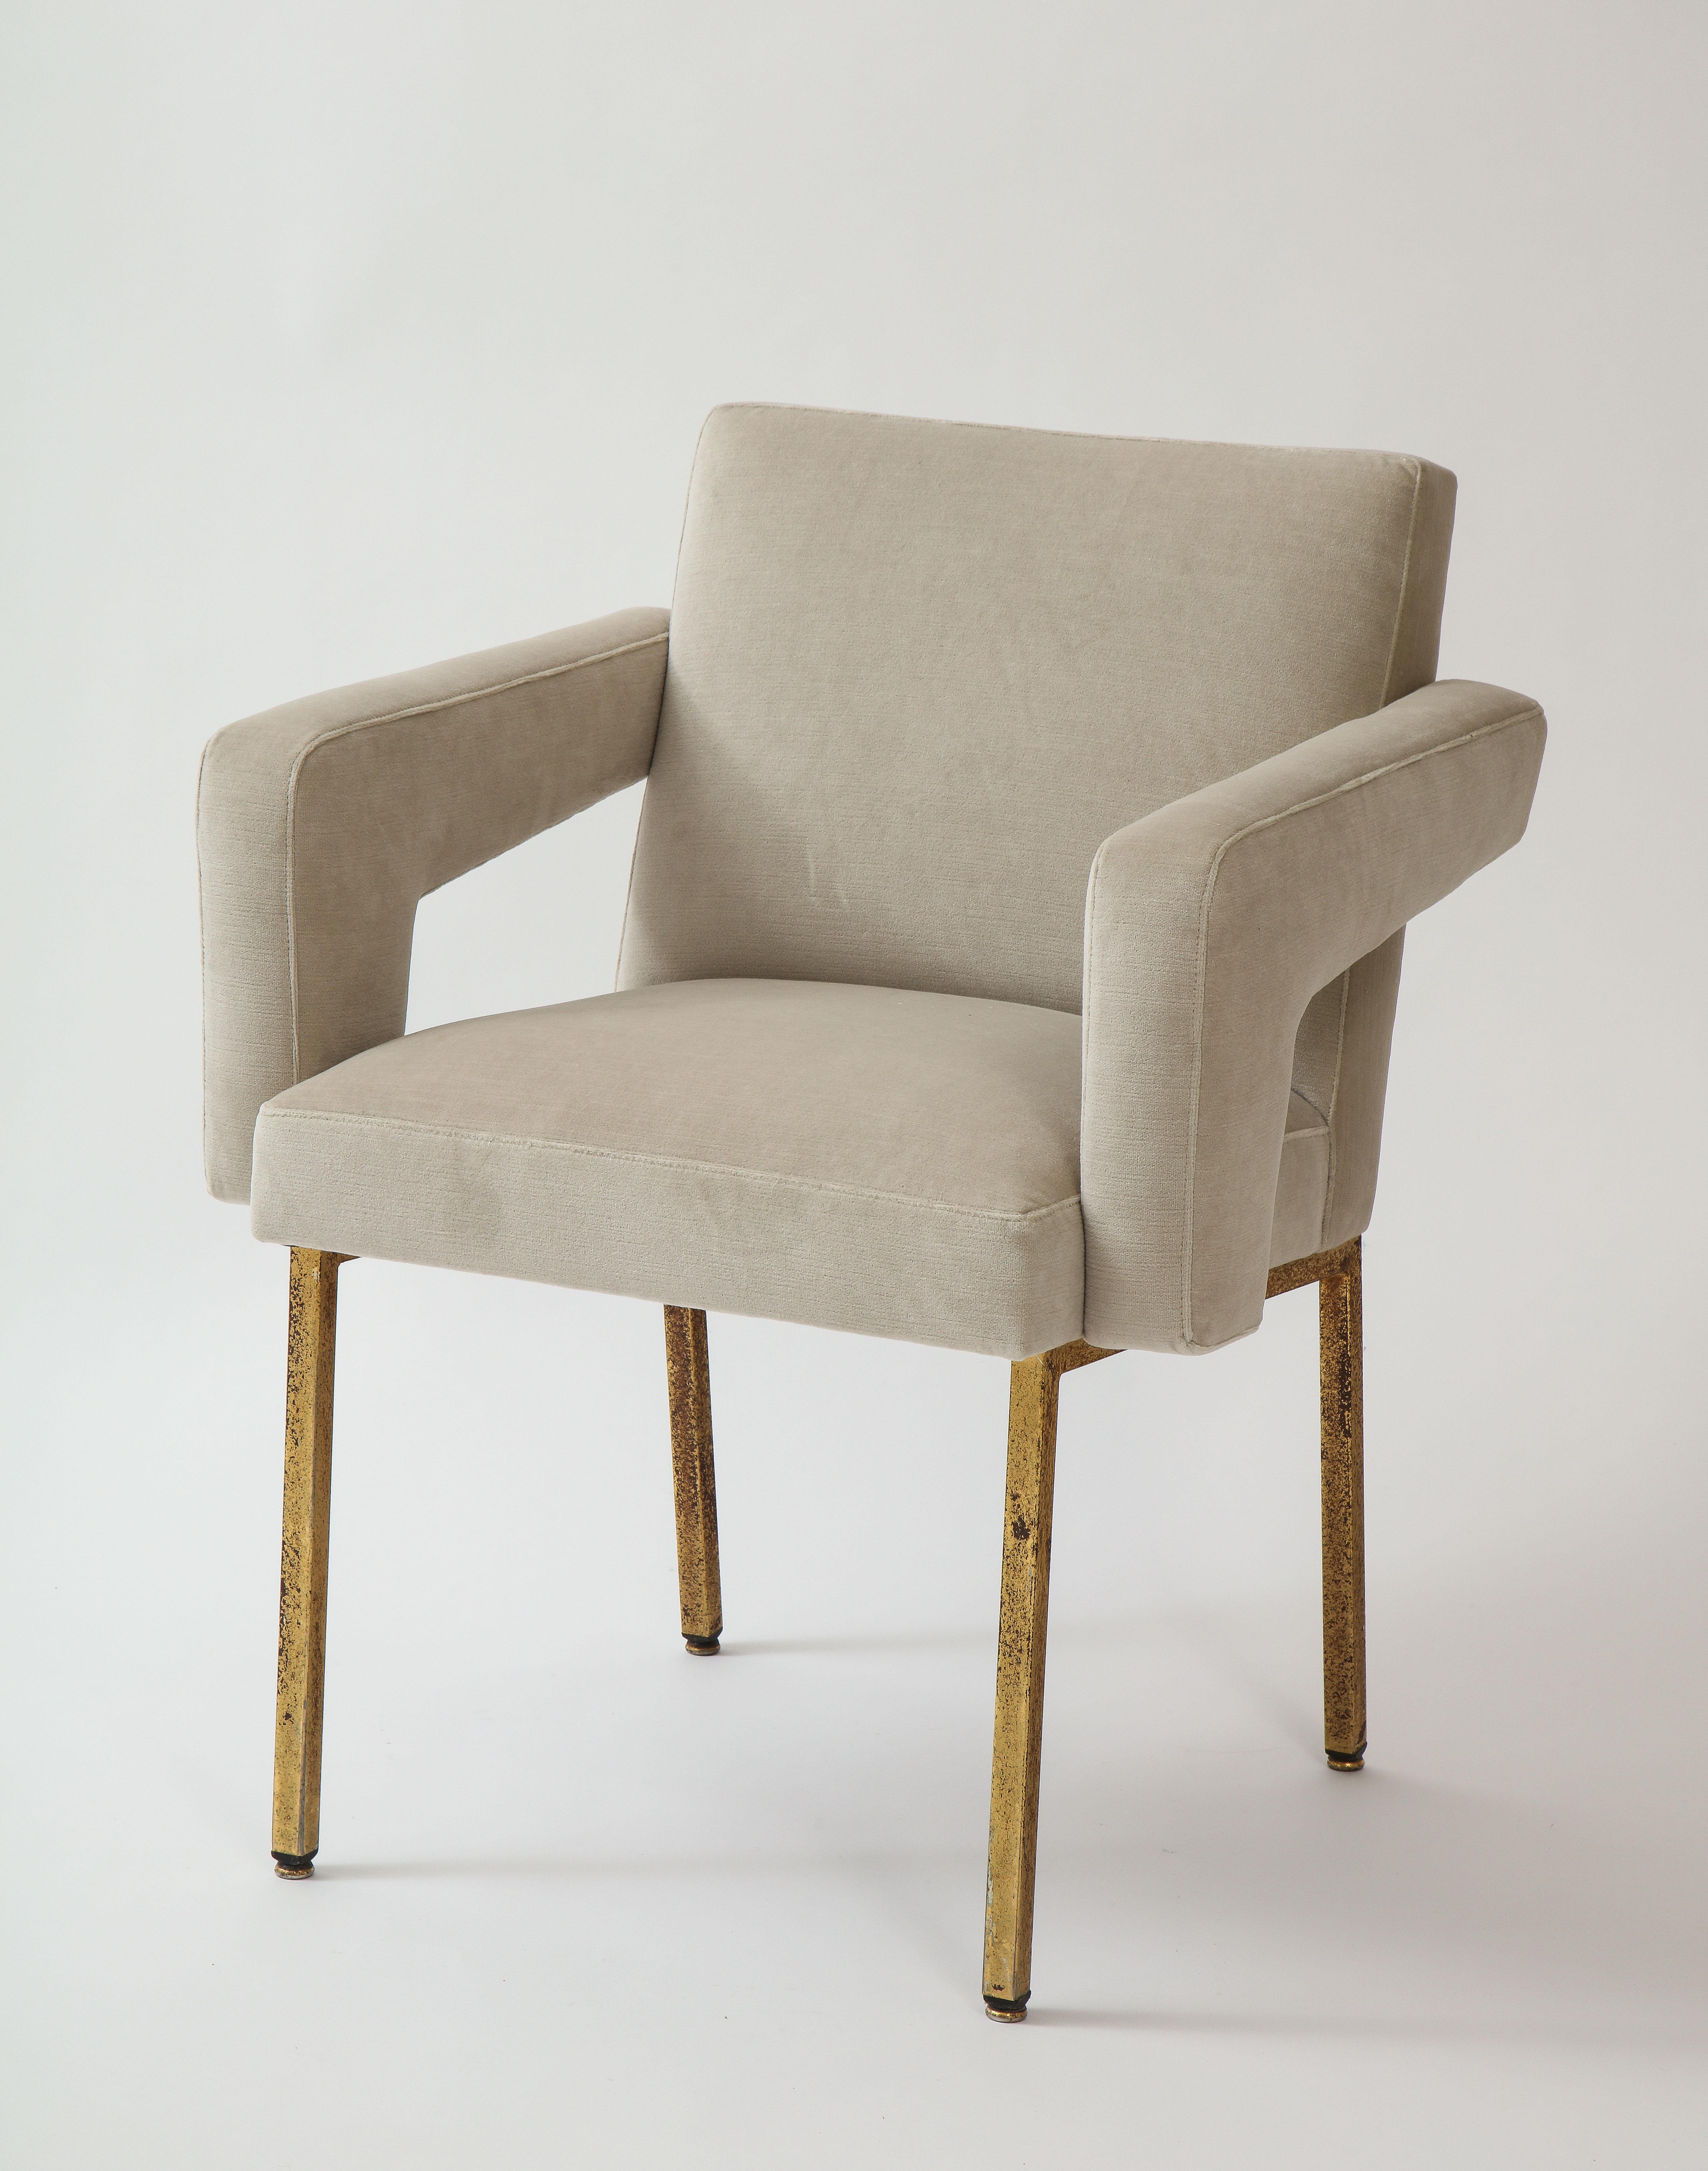 Jacques Adnet president chair brass, re-upholstered grey velvet, France, 1959

Beautiful and chic office or desk chair. Reupholstered in a light grey velvet. Incredible modern design.